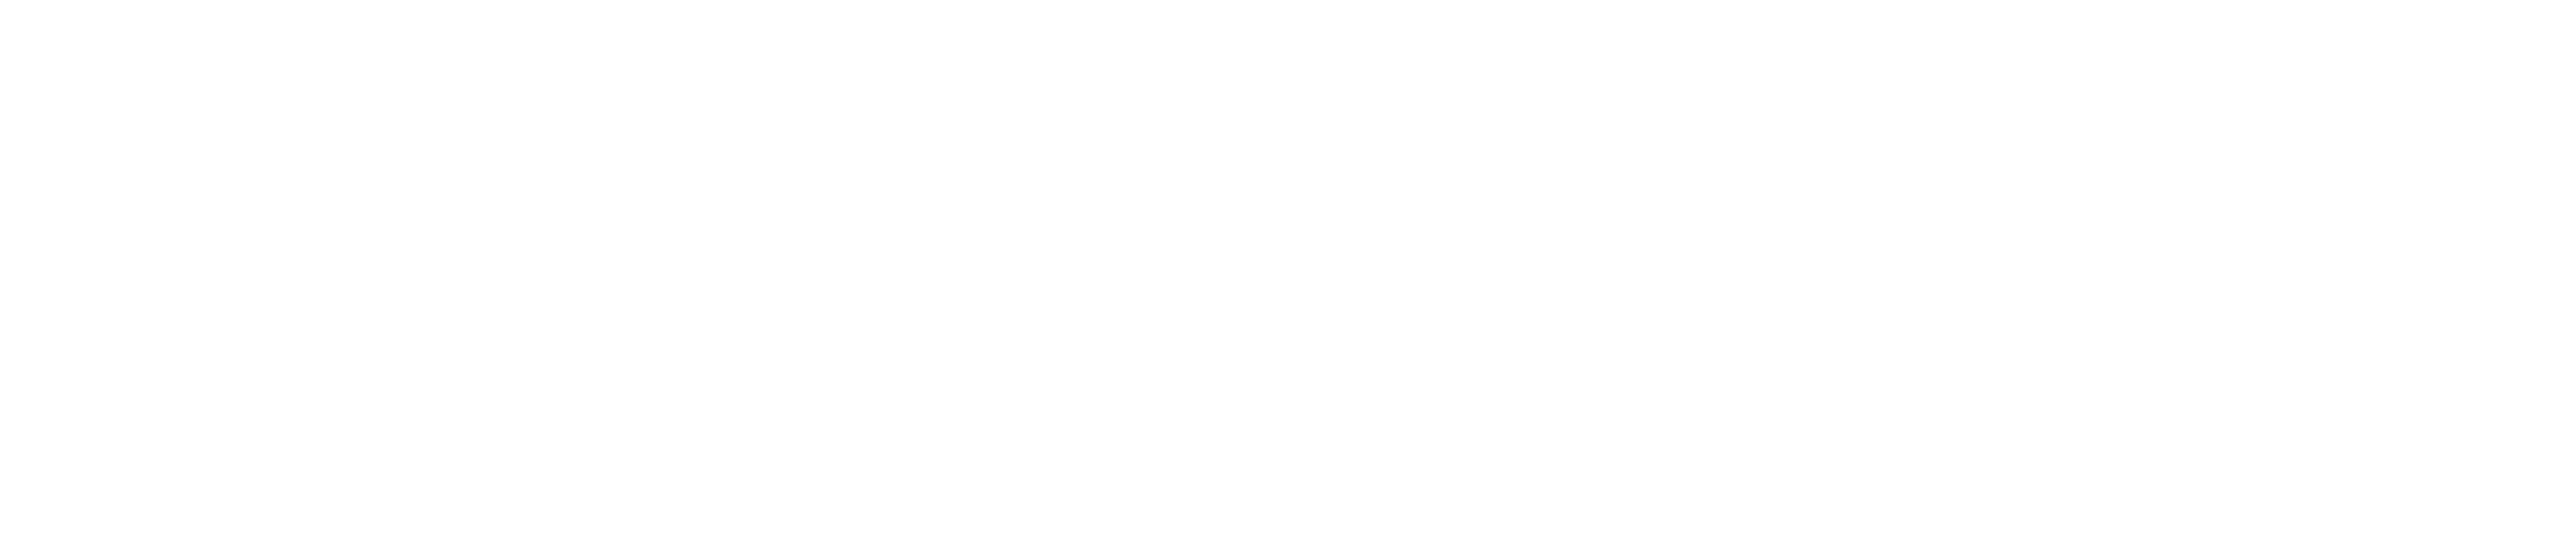 TipeeeStream logo